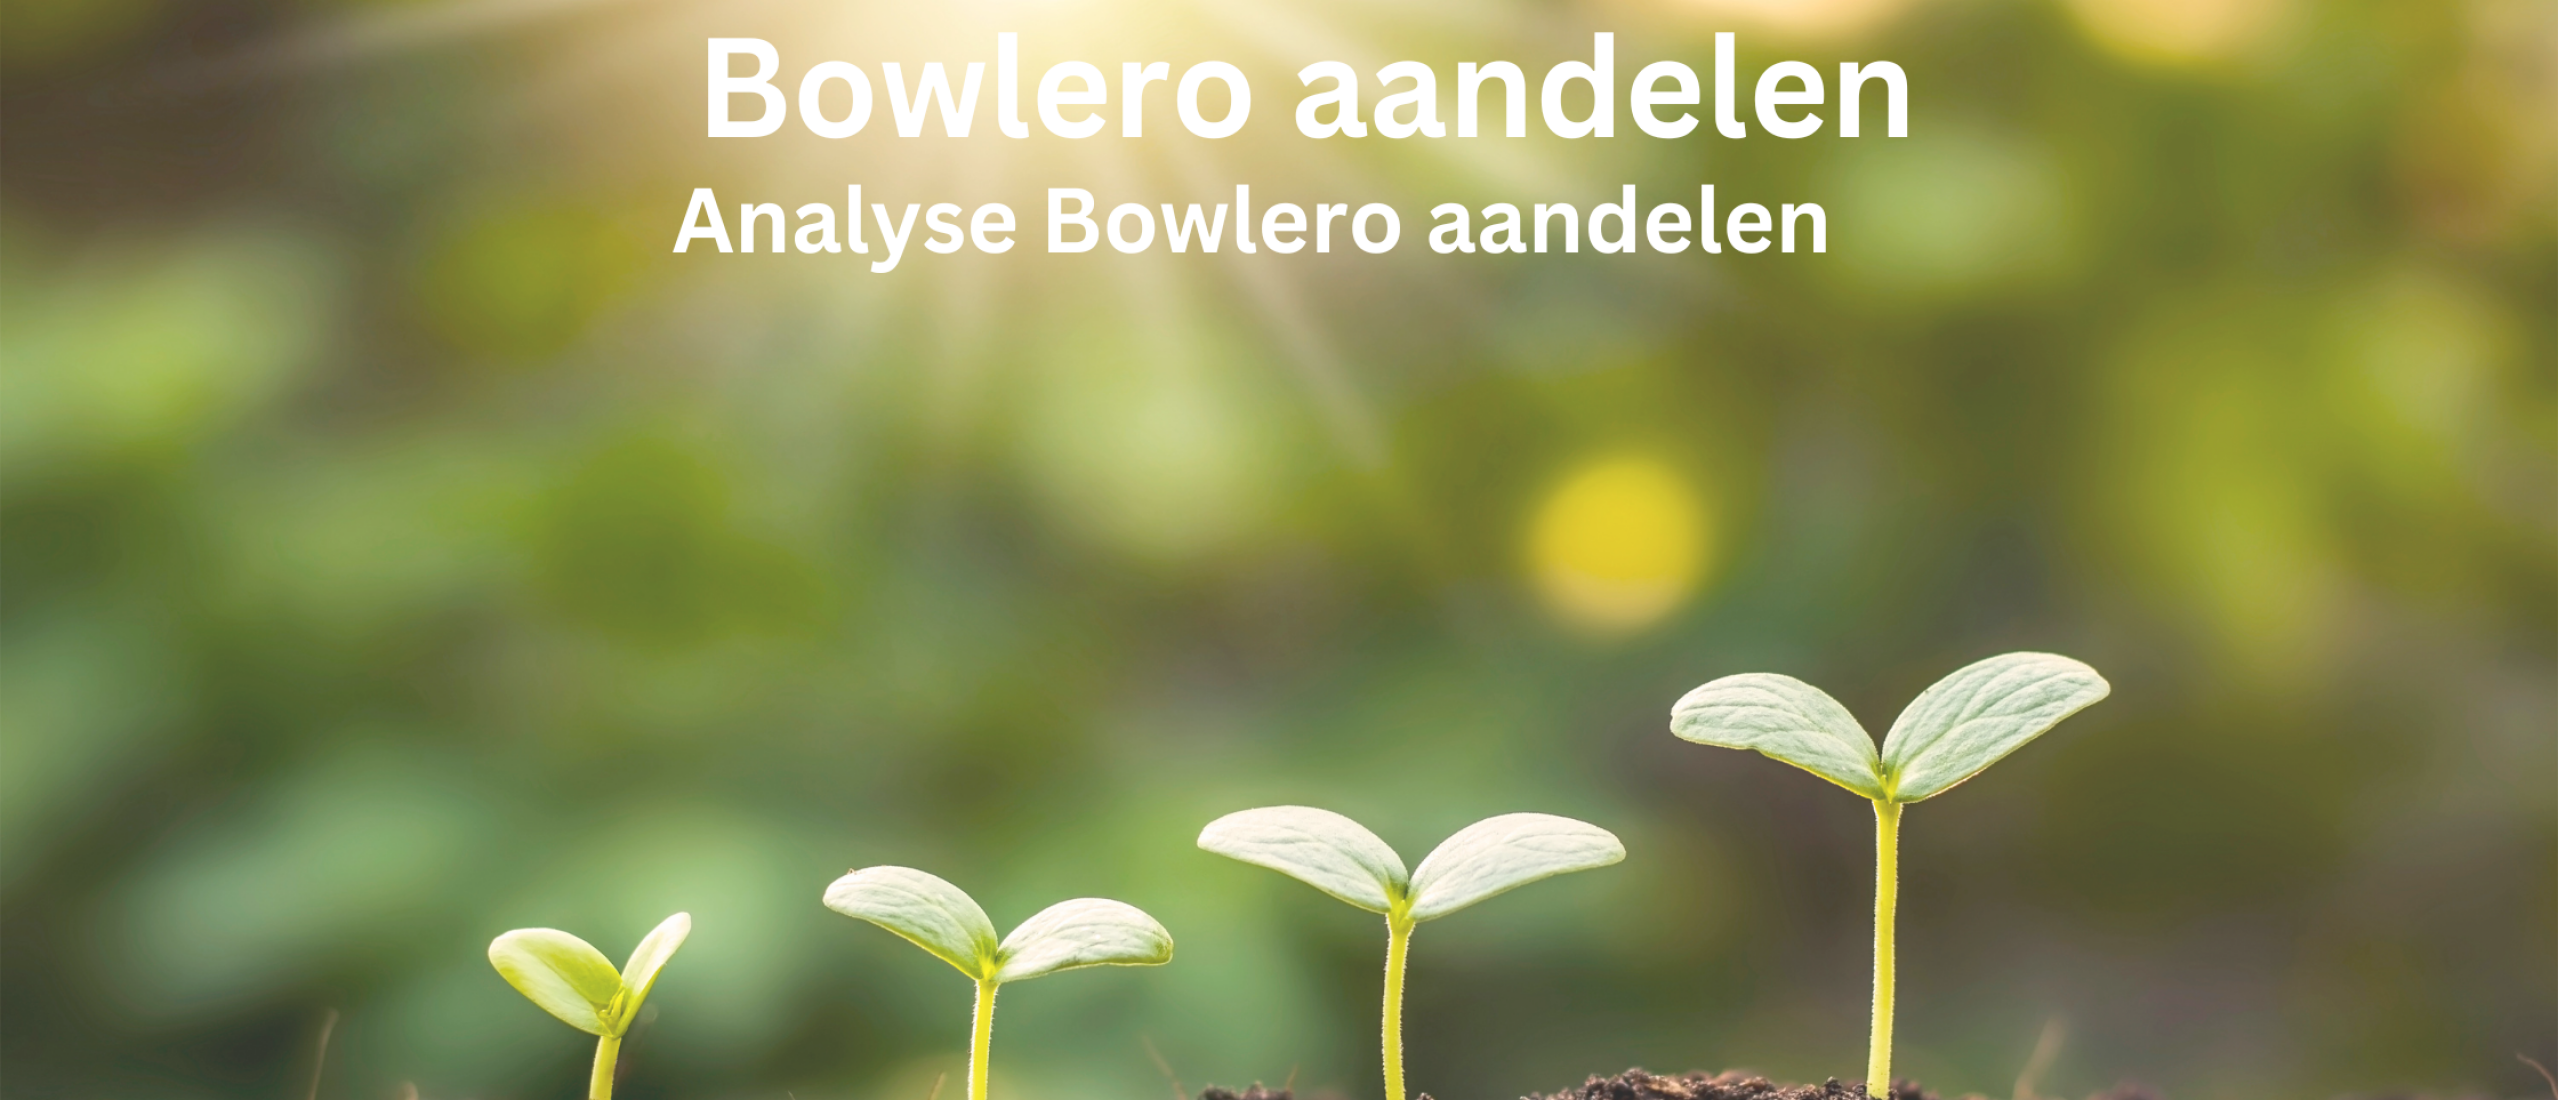 bowlero-